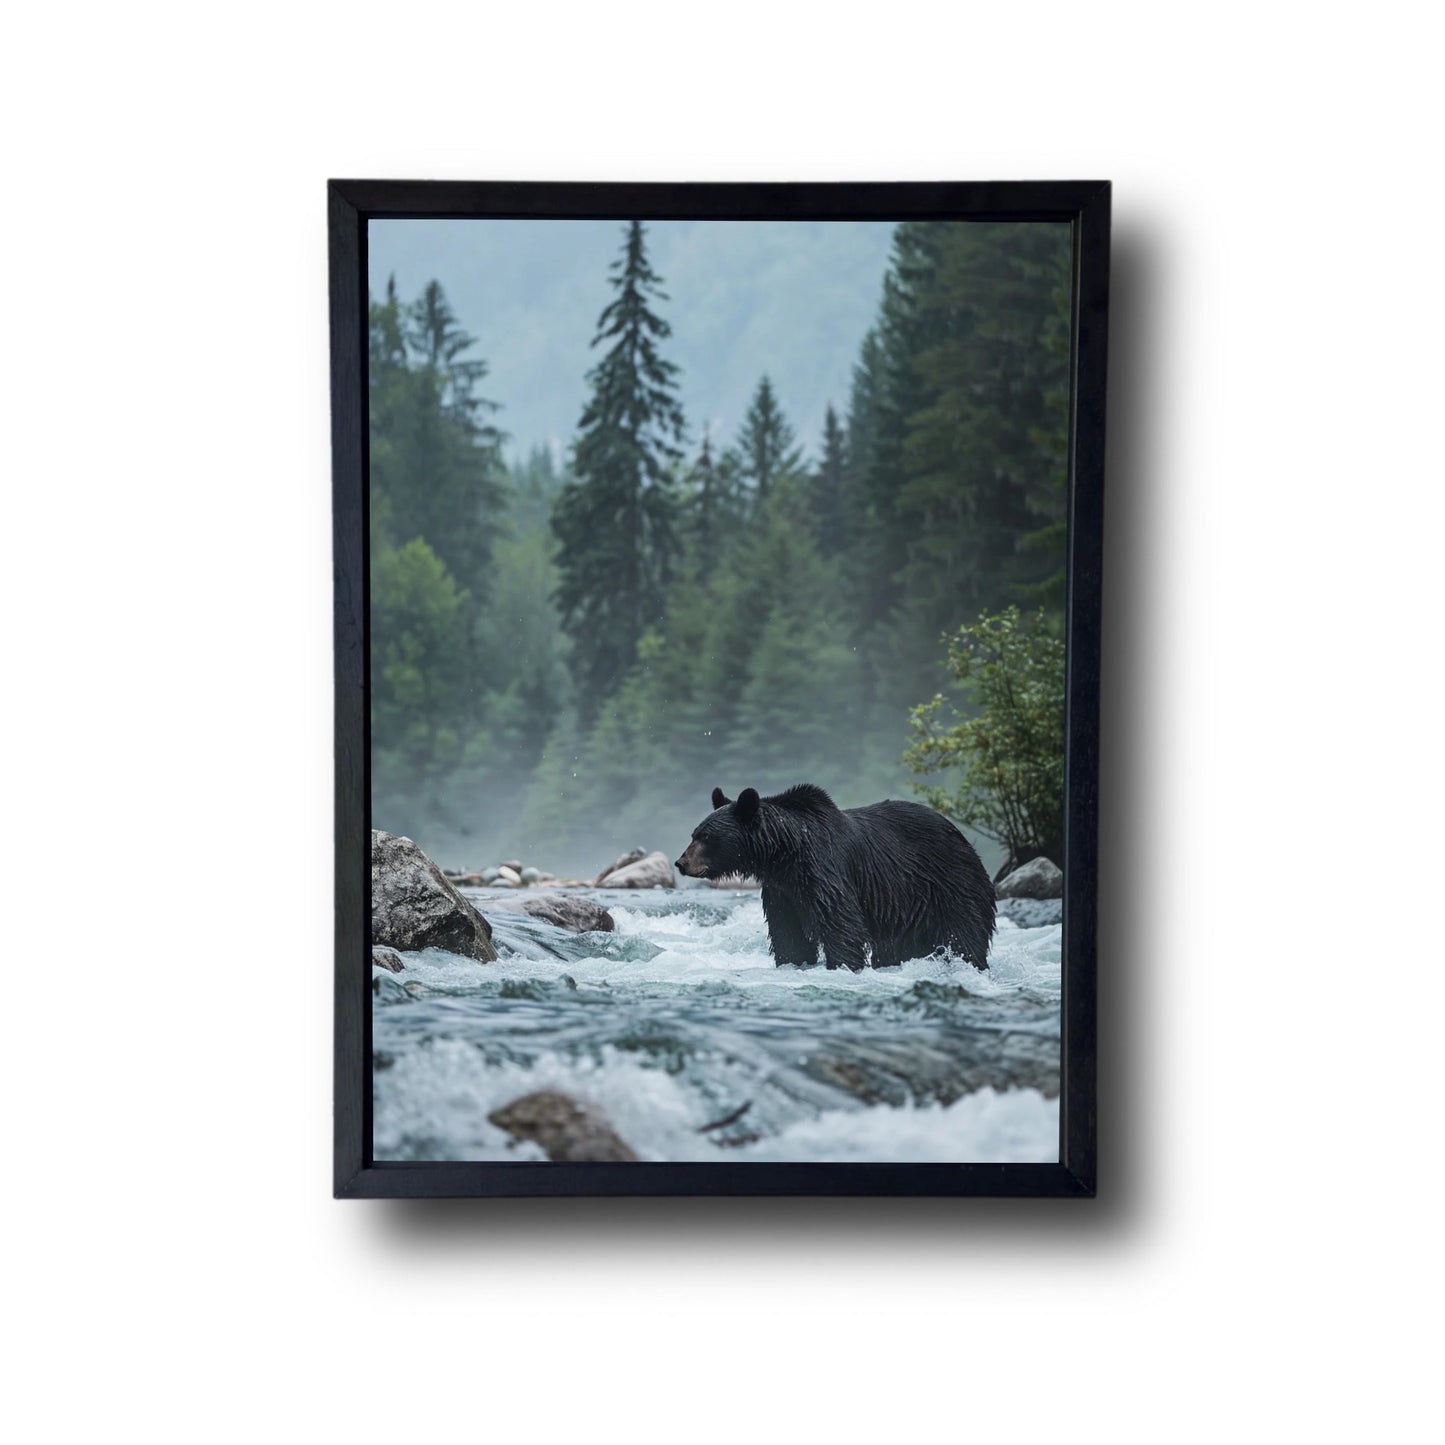 Black bear standing in river